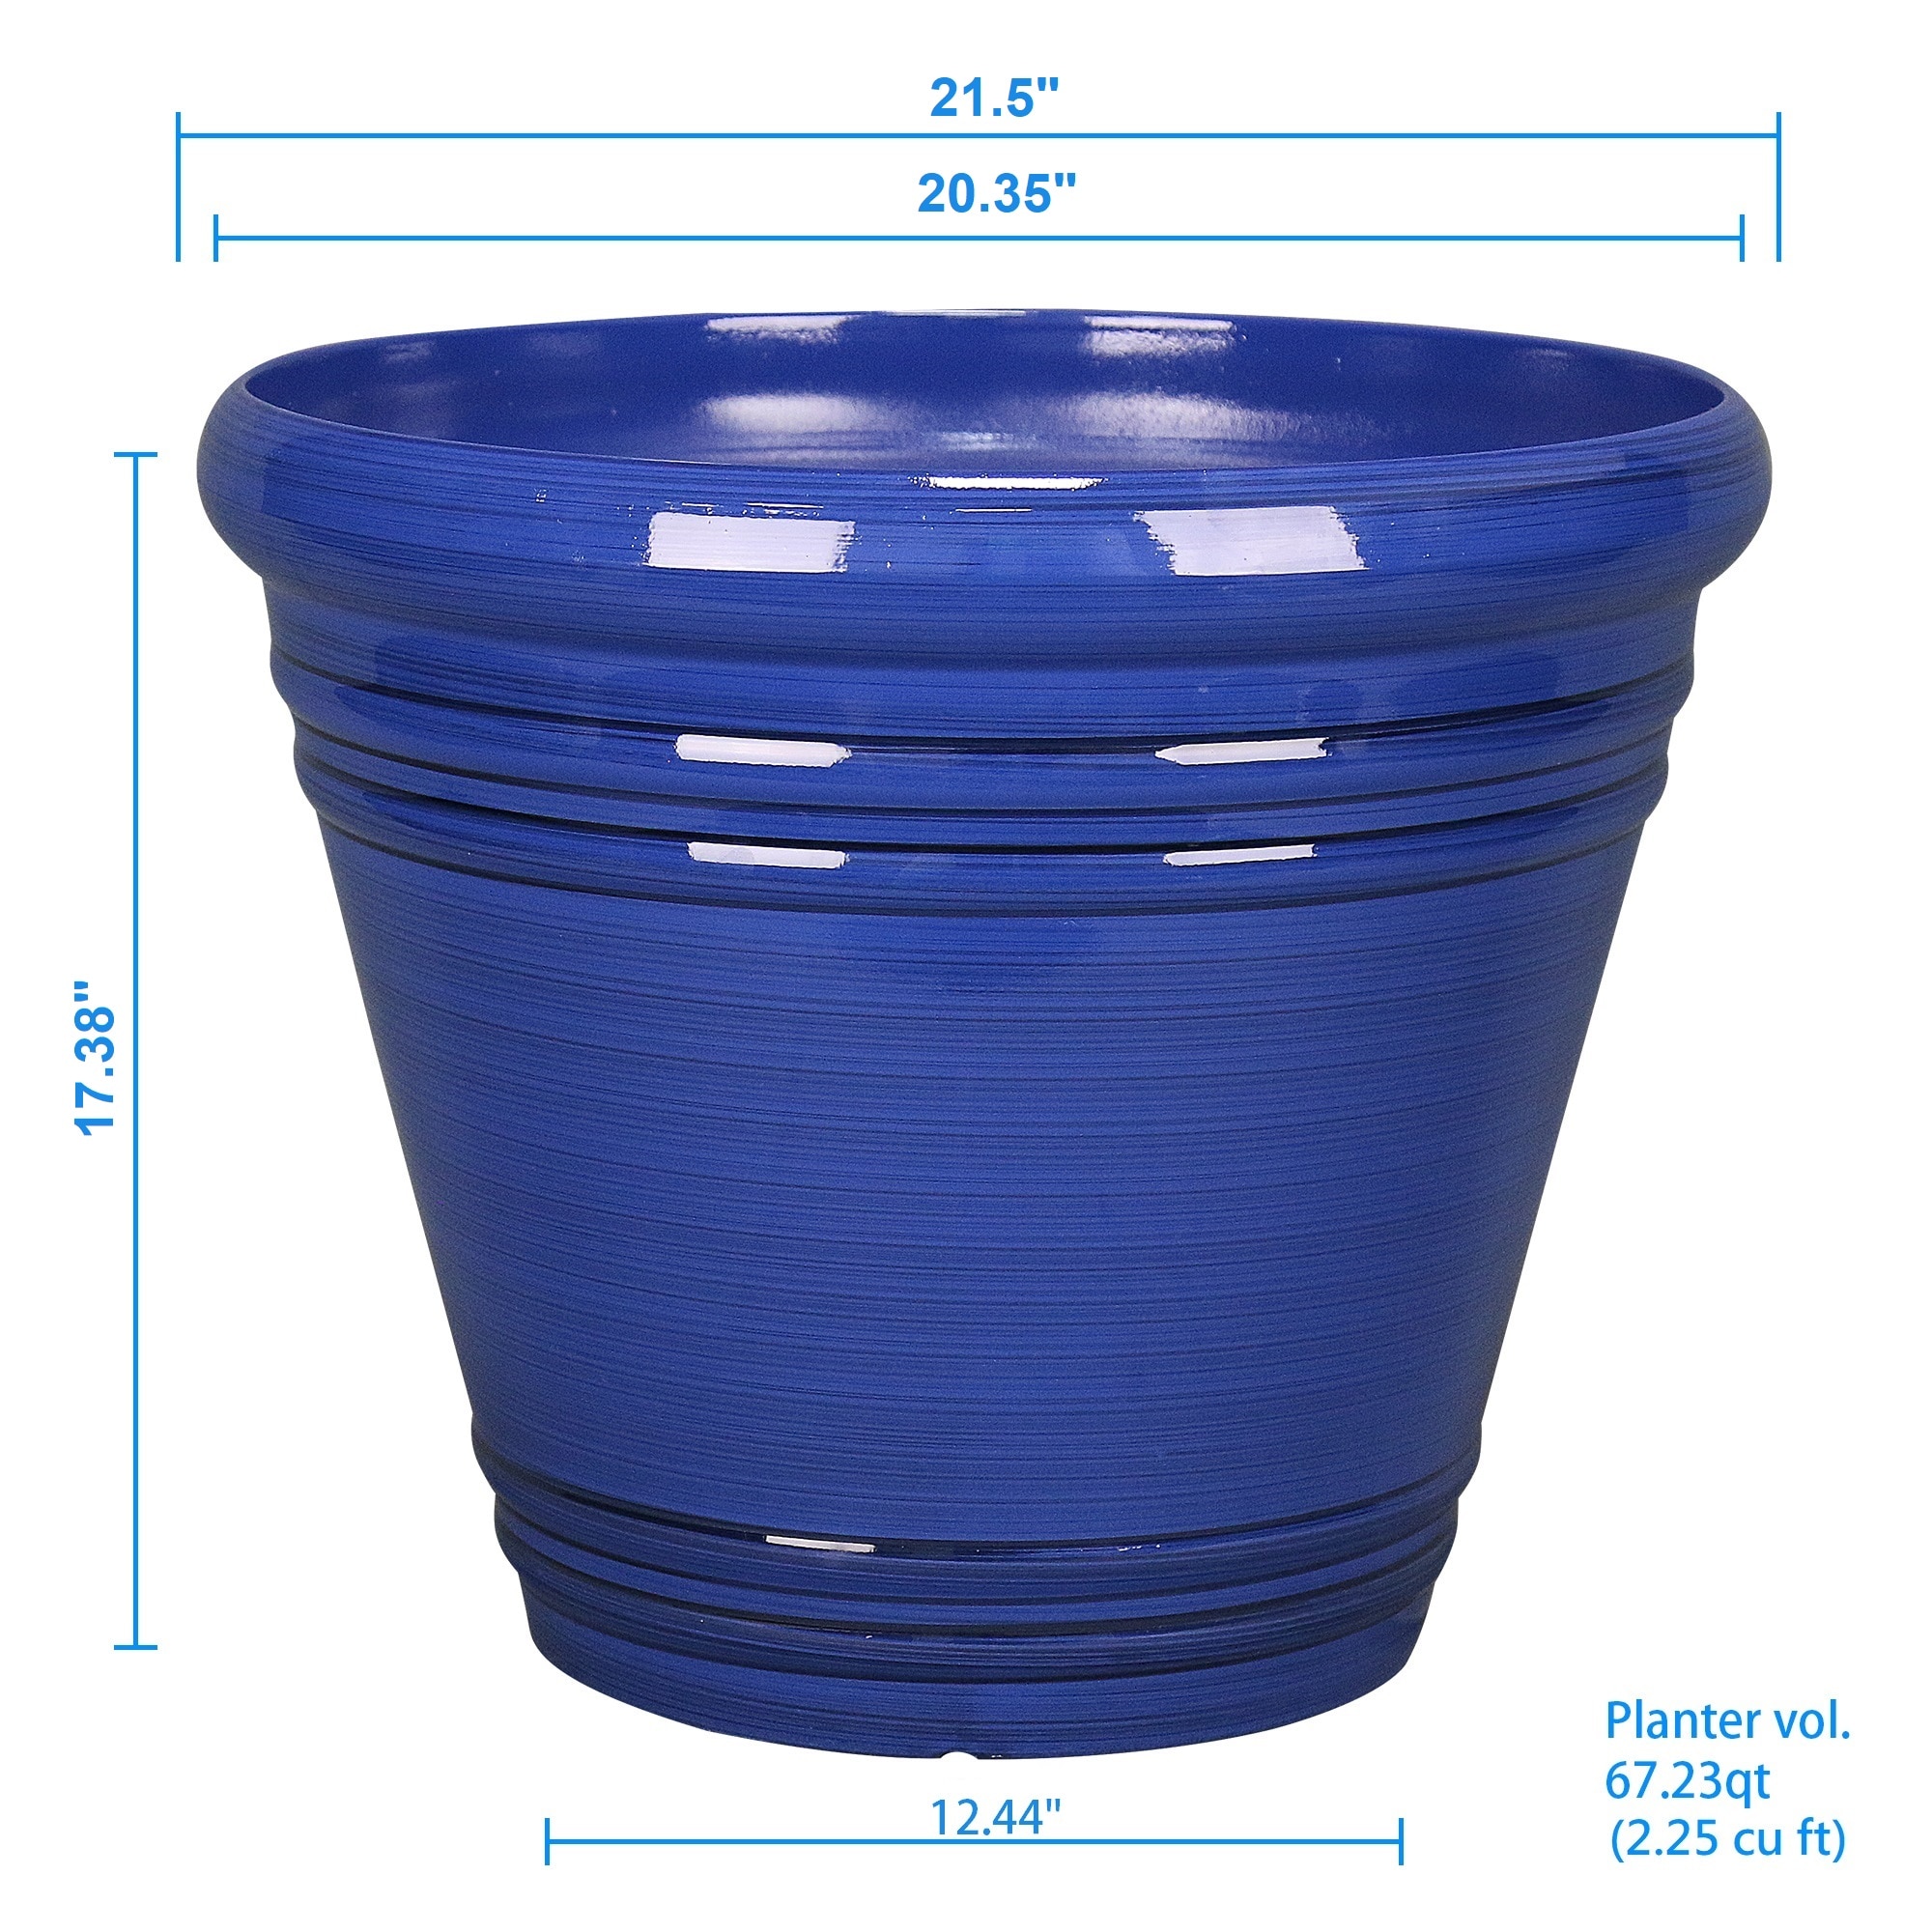 Bright blue 3 gallon felt planter